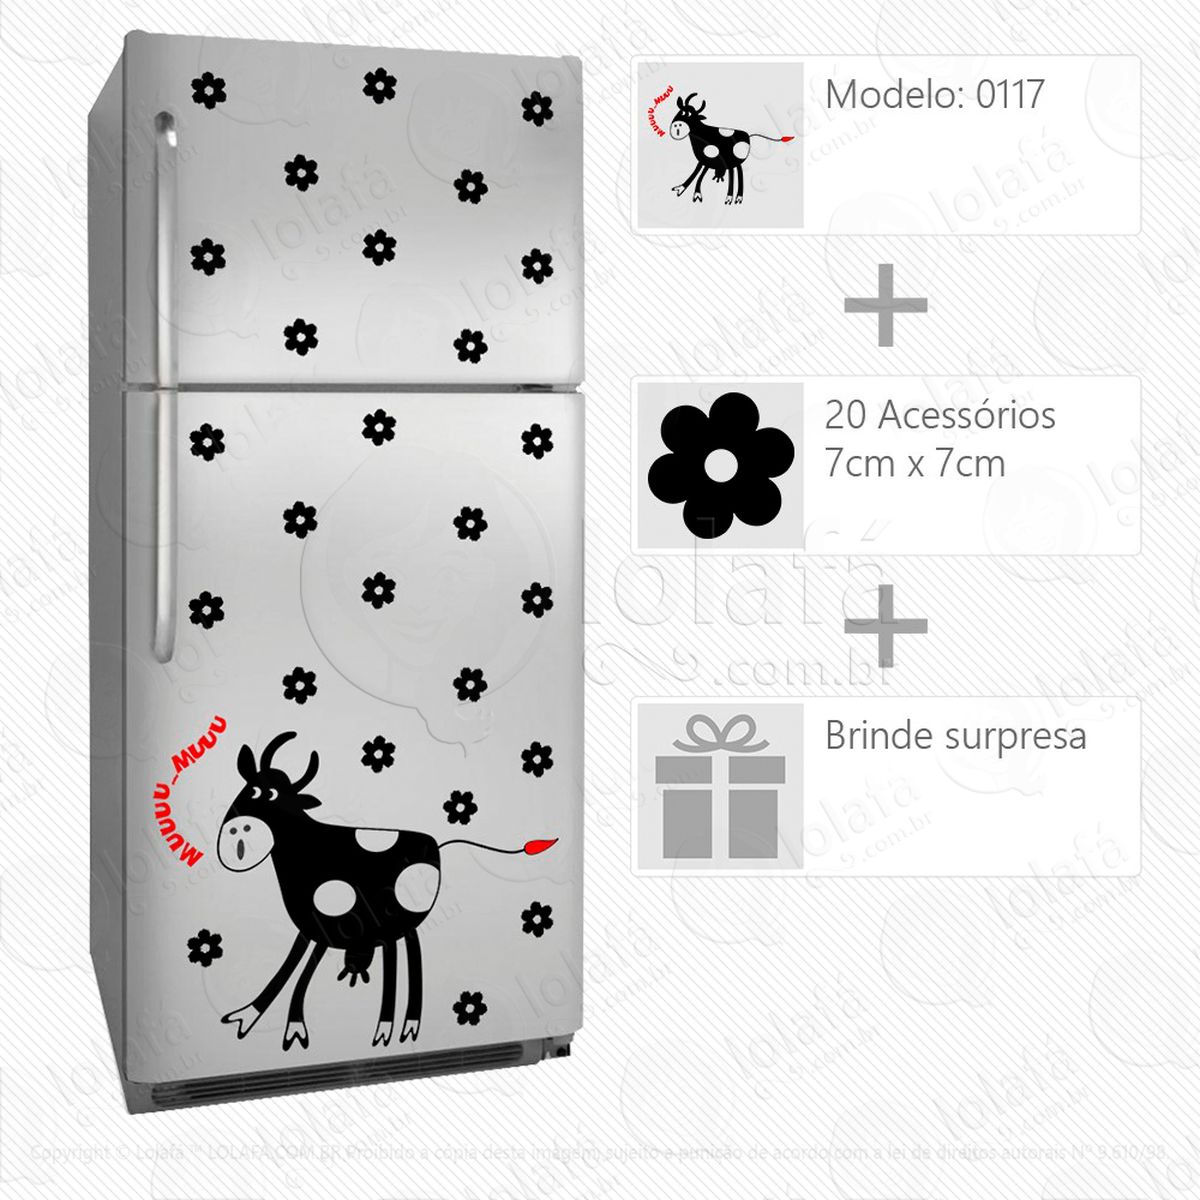 vaca adesivo para geladeira e frigobar - mod:117